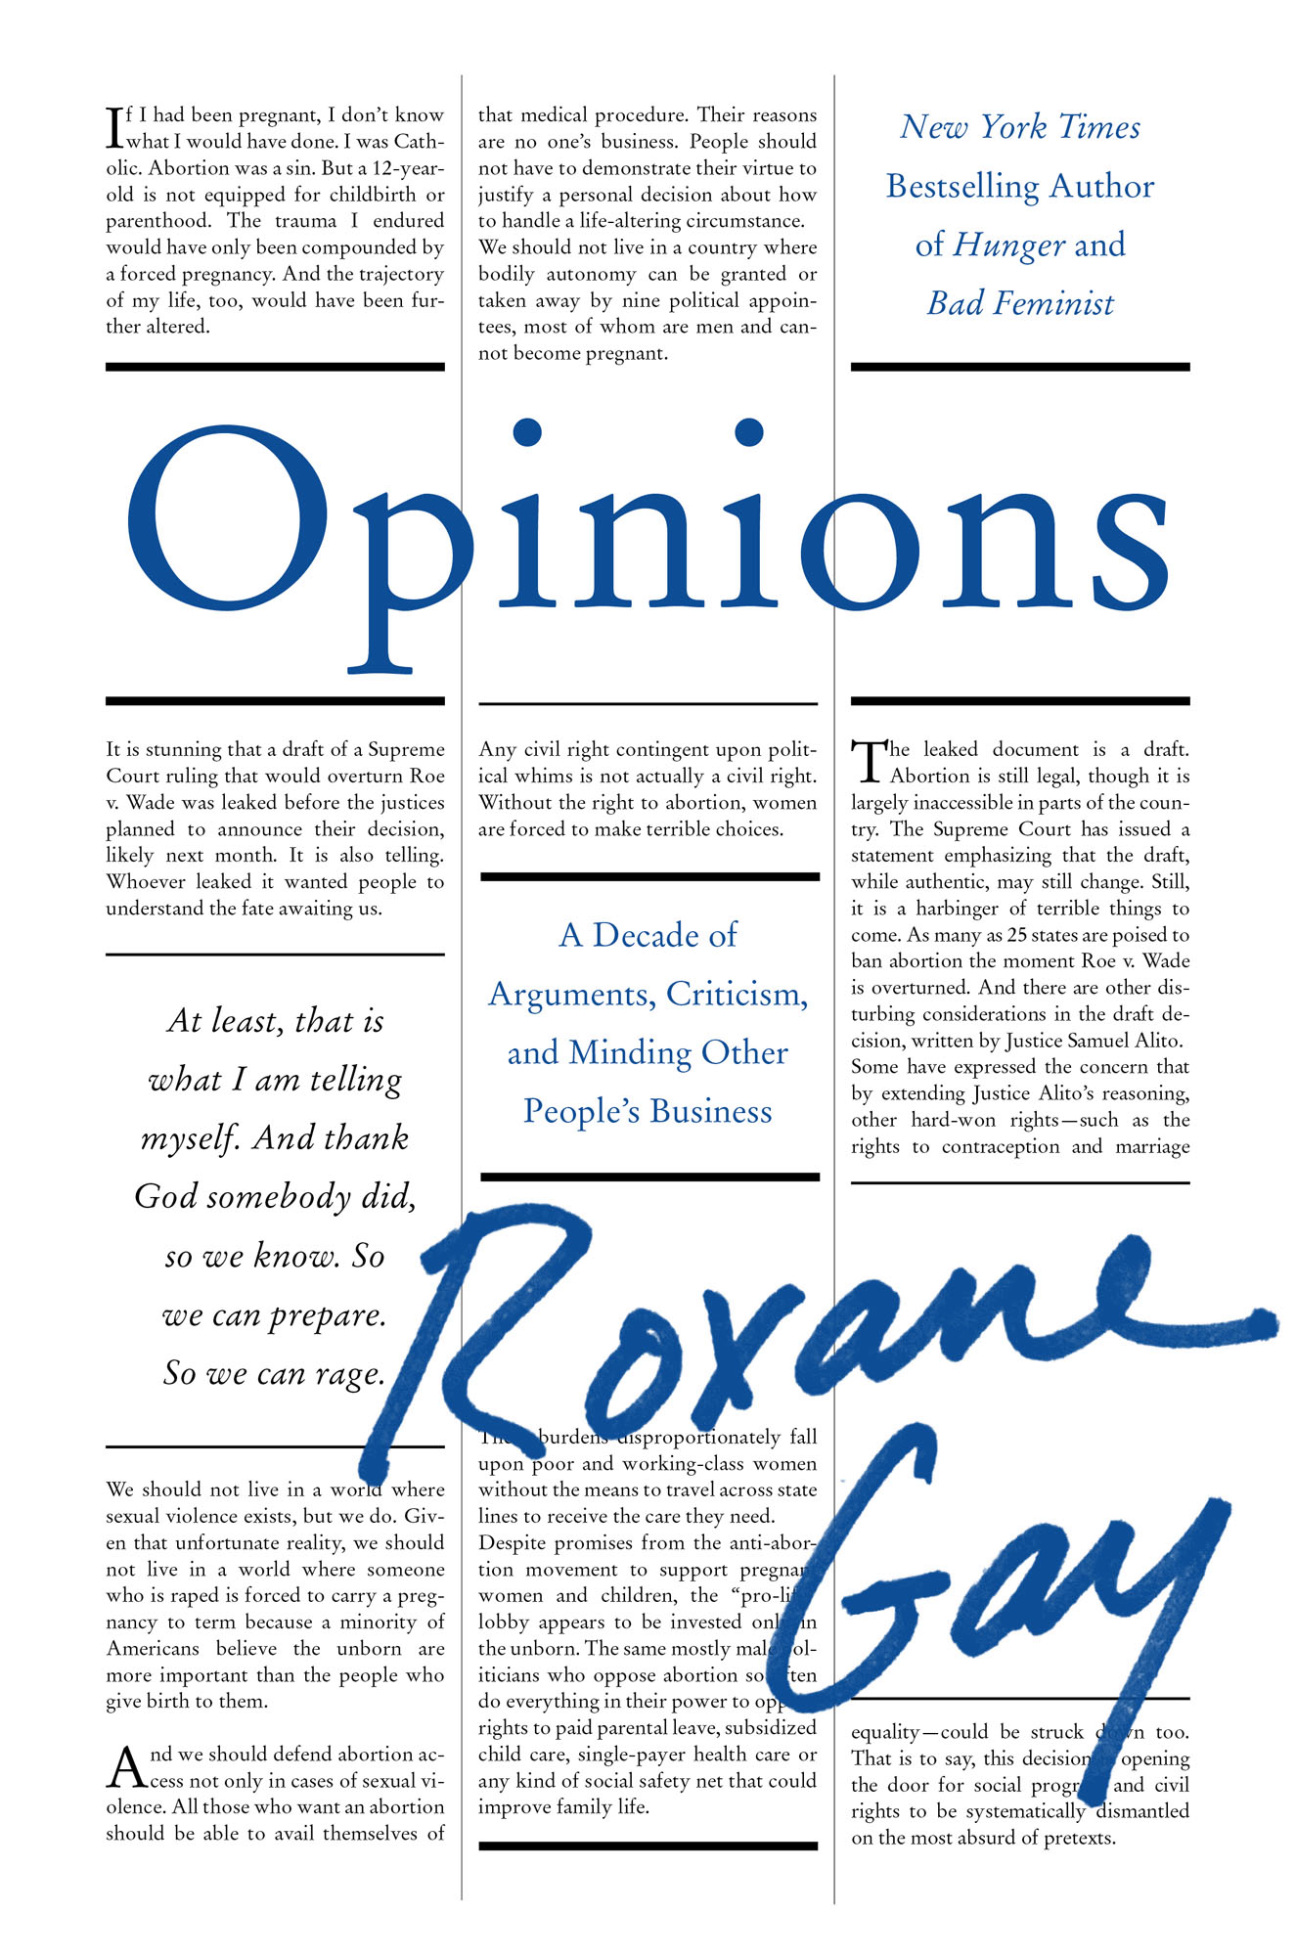 roxane-gay-author